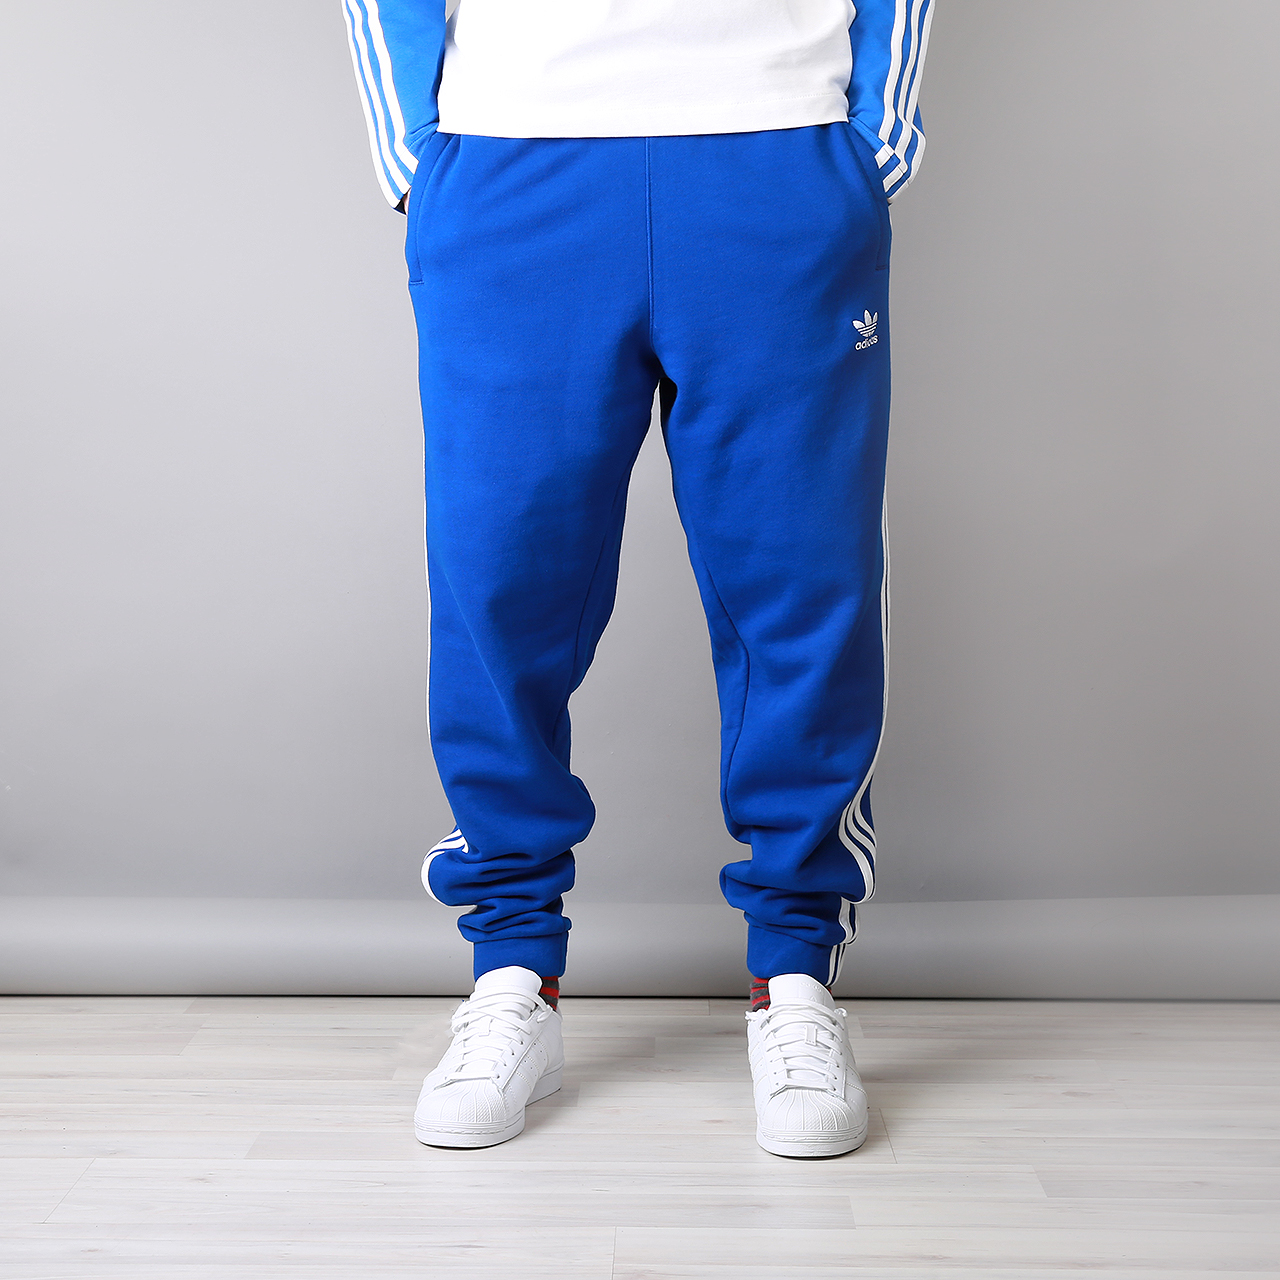 Мужские штаны 3. Adidas 3 Stripes штаны синие. Штаны адидас мужские синие. Adidas Originals штаны мужские синие. Спортивные штаны адидас мужские голубые.